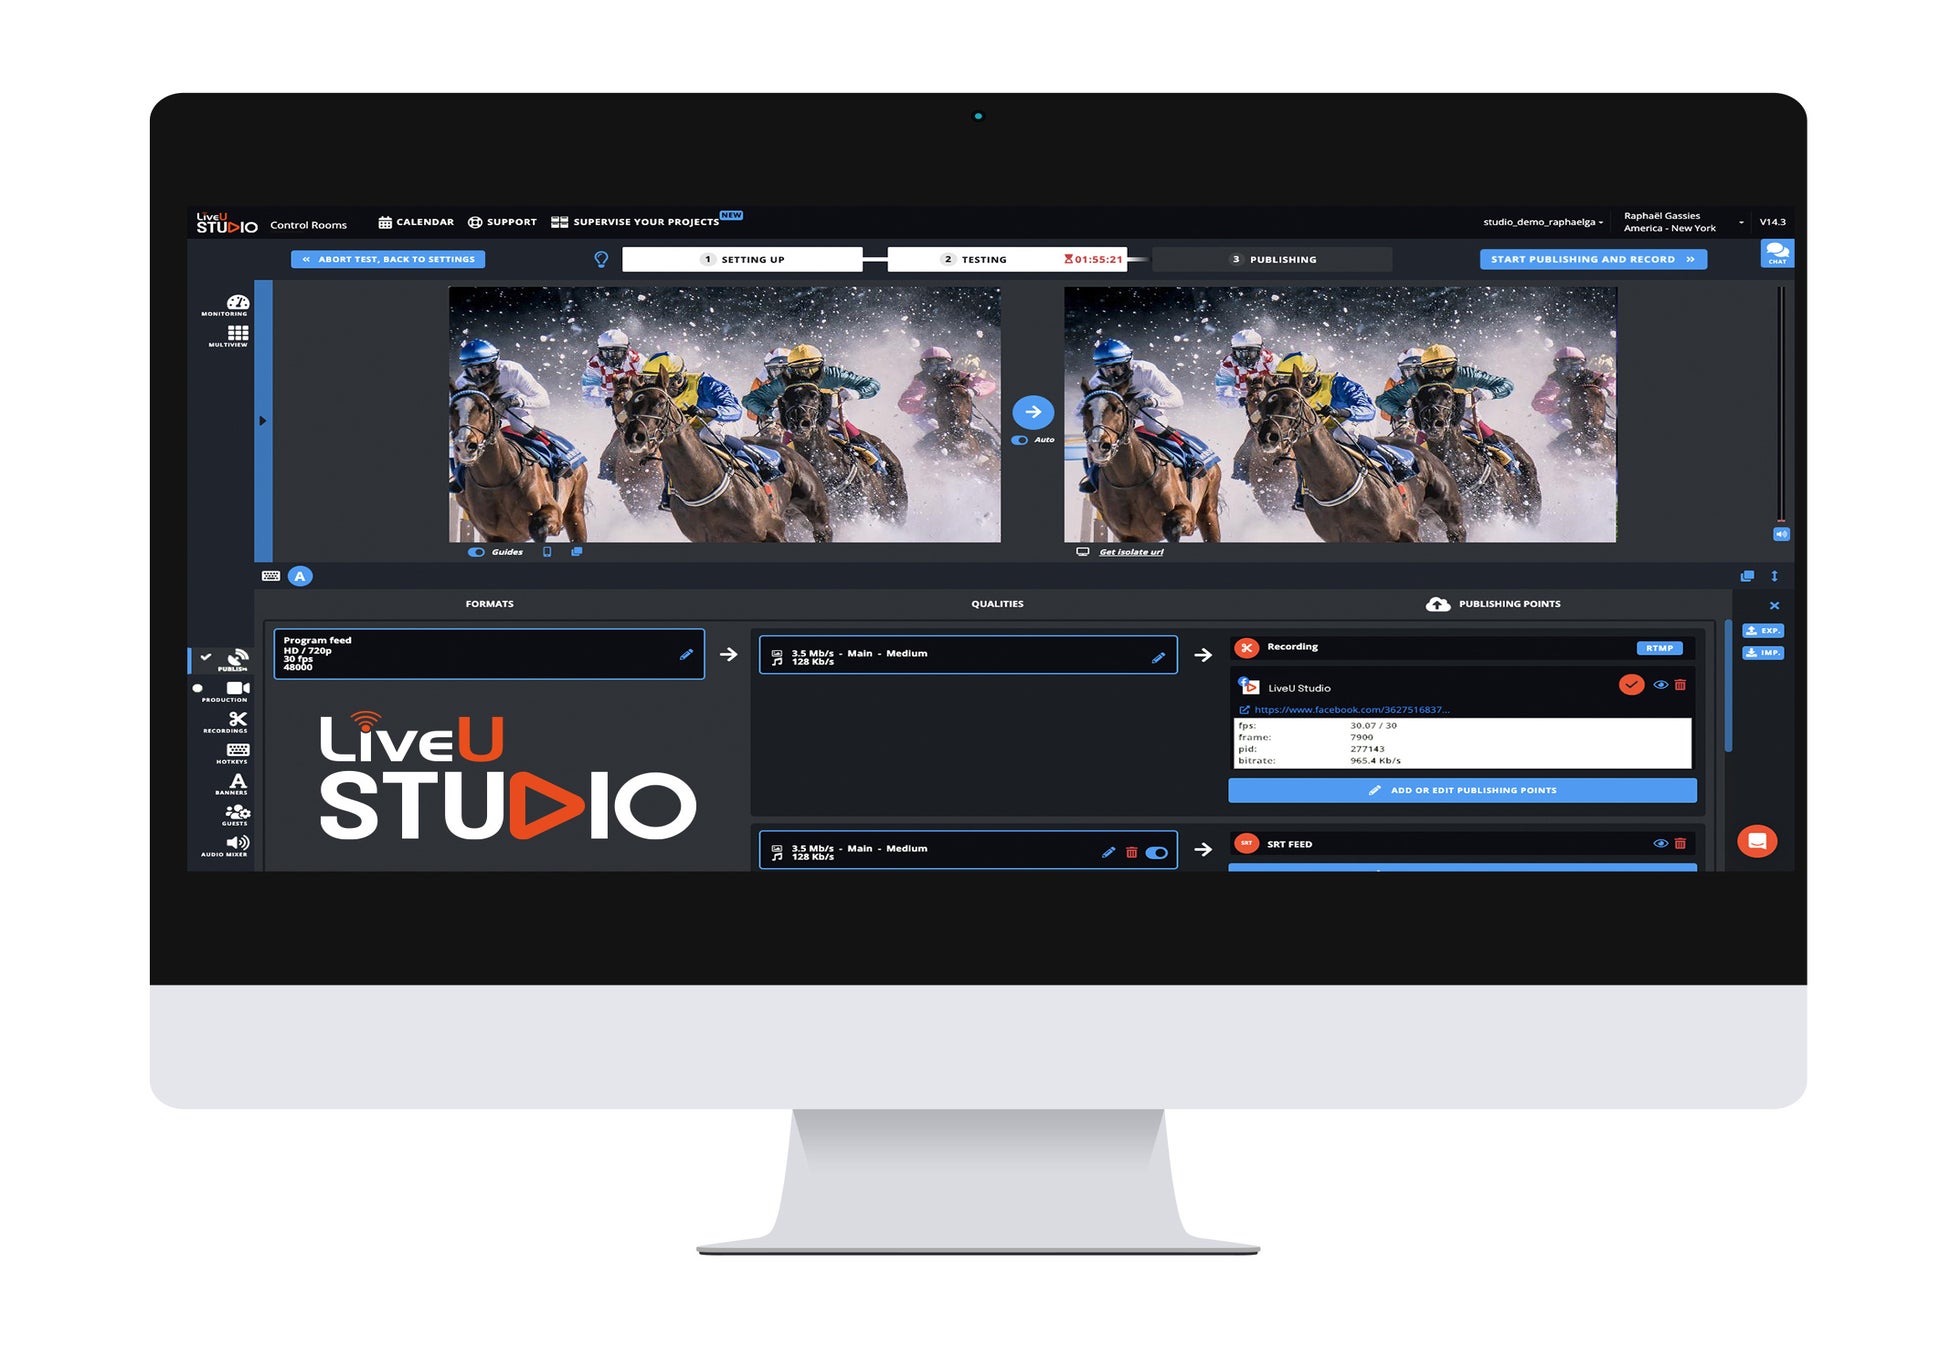 「LiveU Studio」が登場！LRT™をダイレクトにサポートするクラウドIPライブビデオ制作サービスで、ライブプロダクションに革新をもたらす。